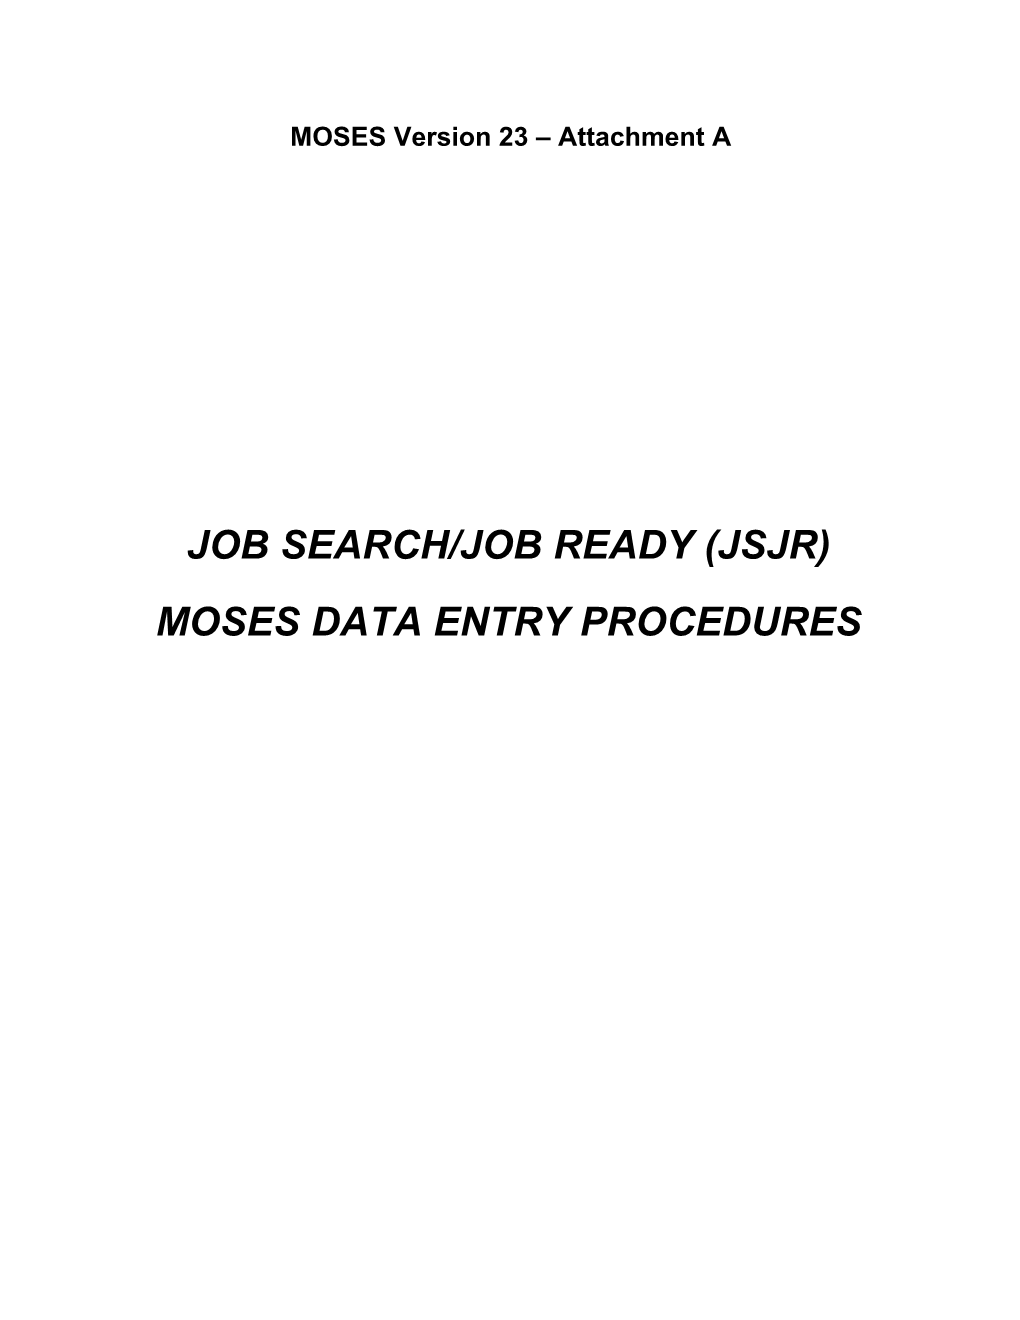 Job Search/Job Ready (Jsjr)